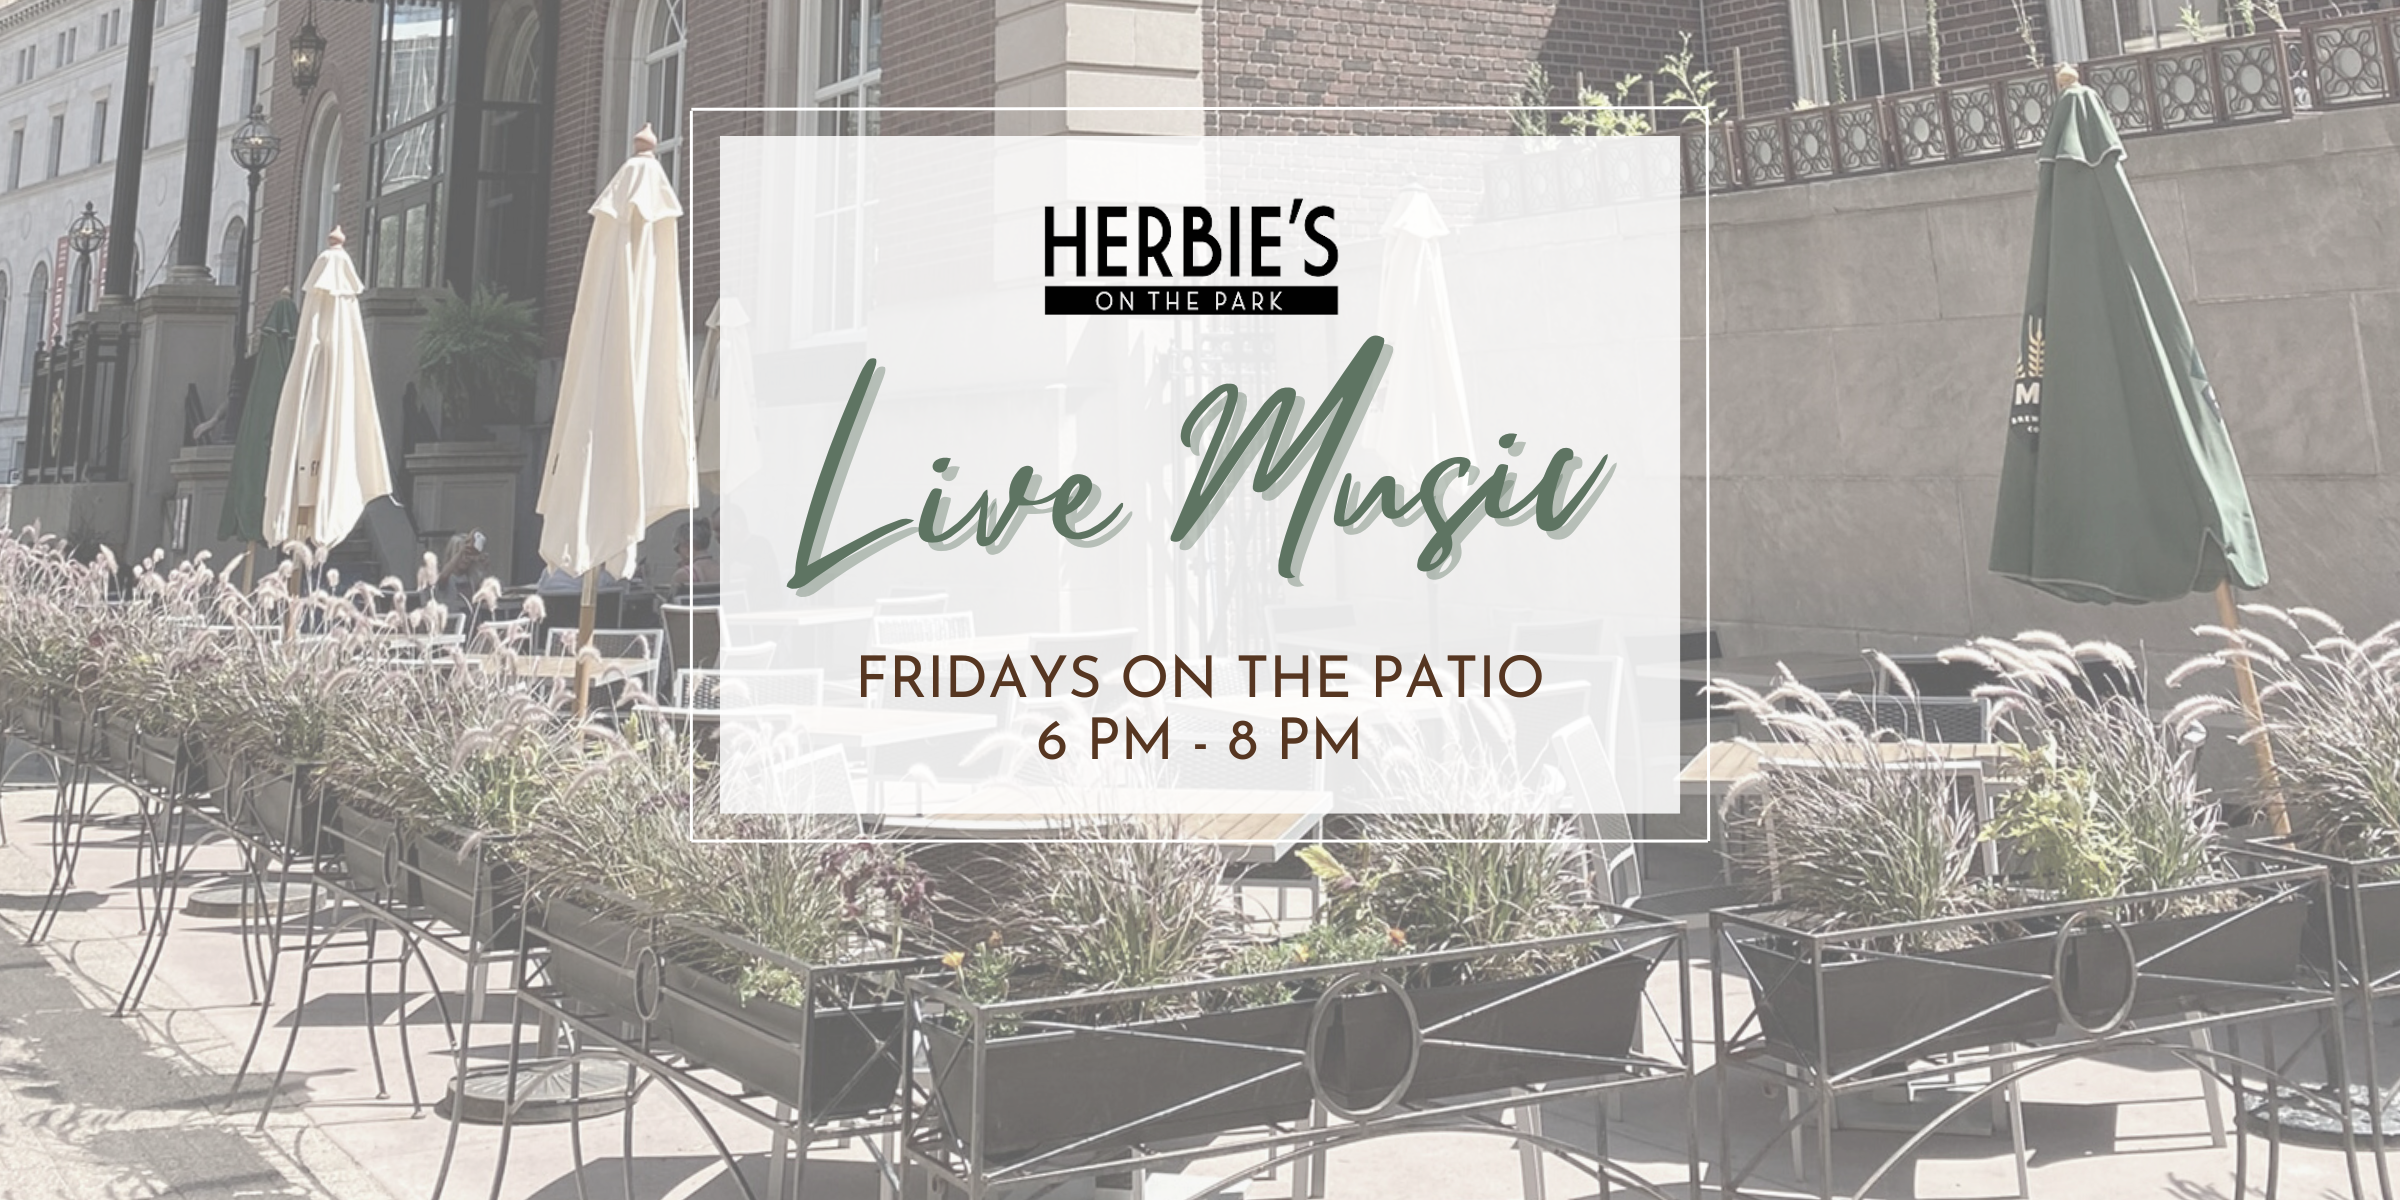 Herbie's on the Park Saint Paul Minnesota Live Music on Friday Evenings